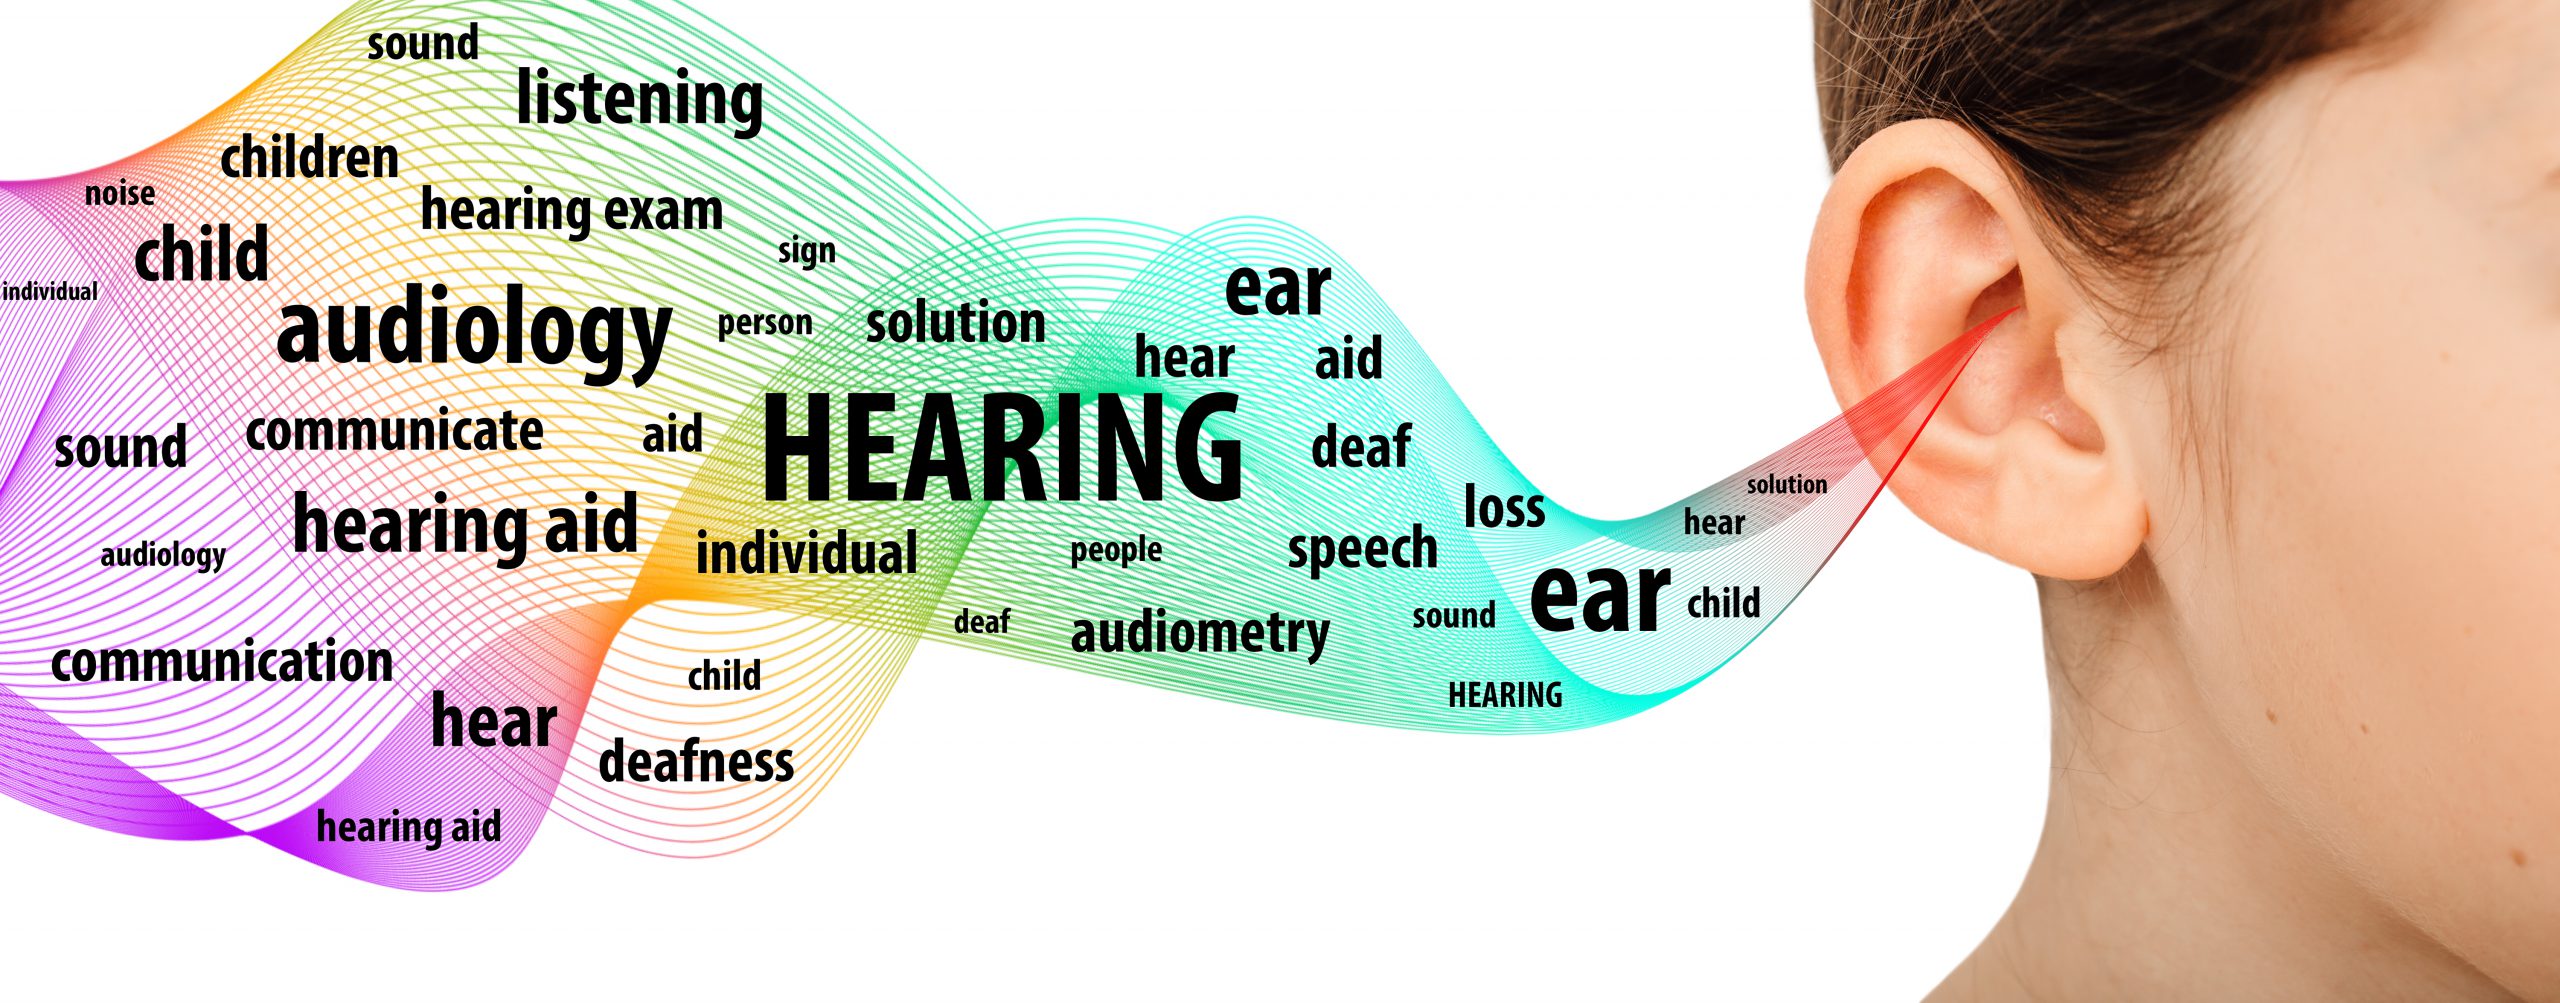 Hearing health care